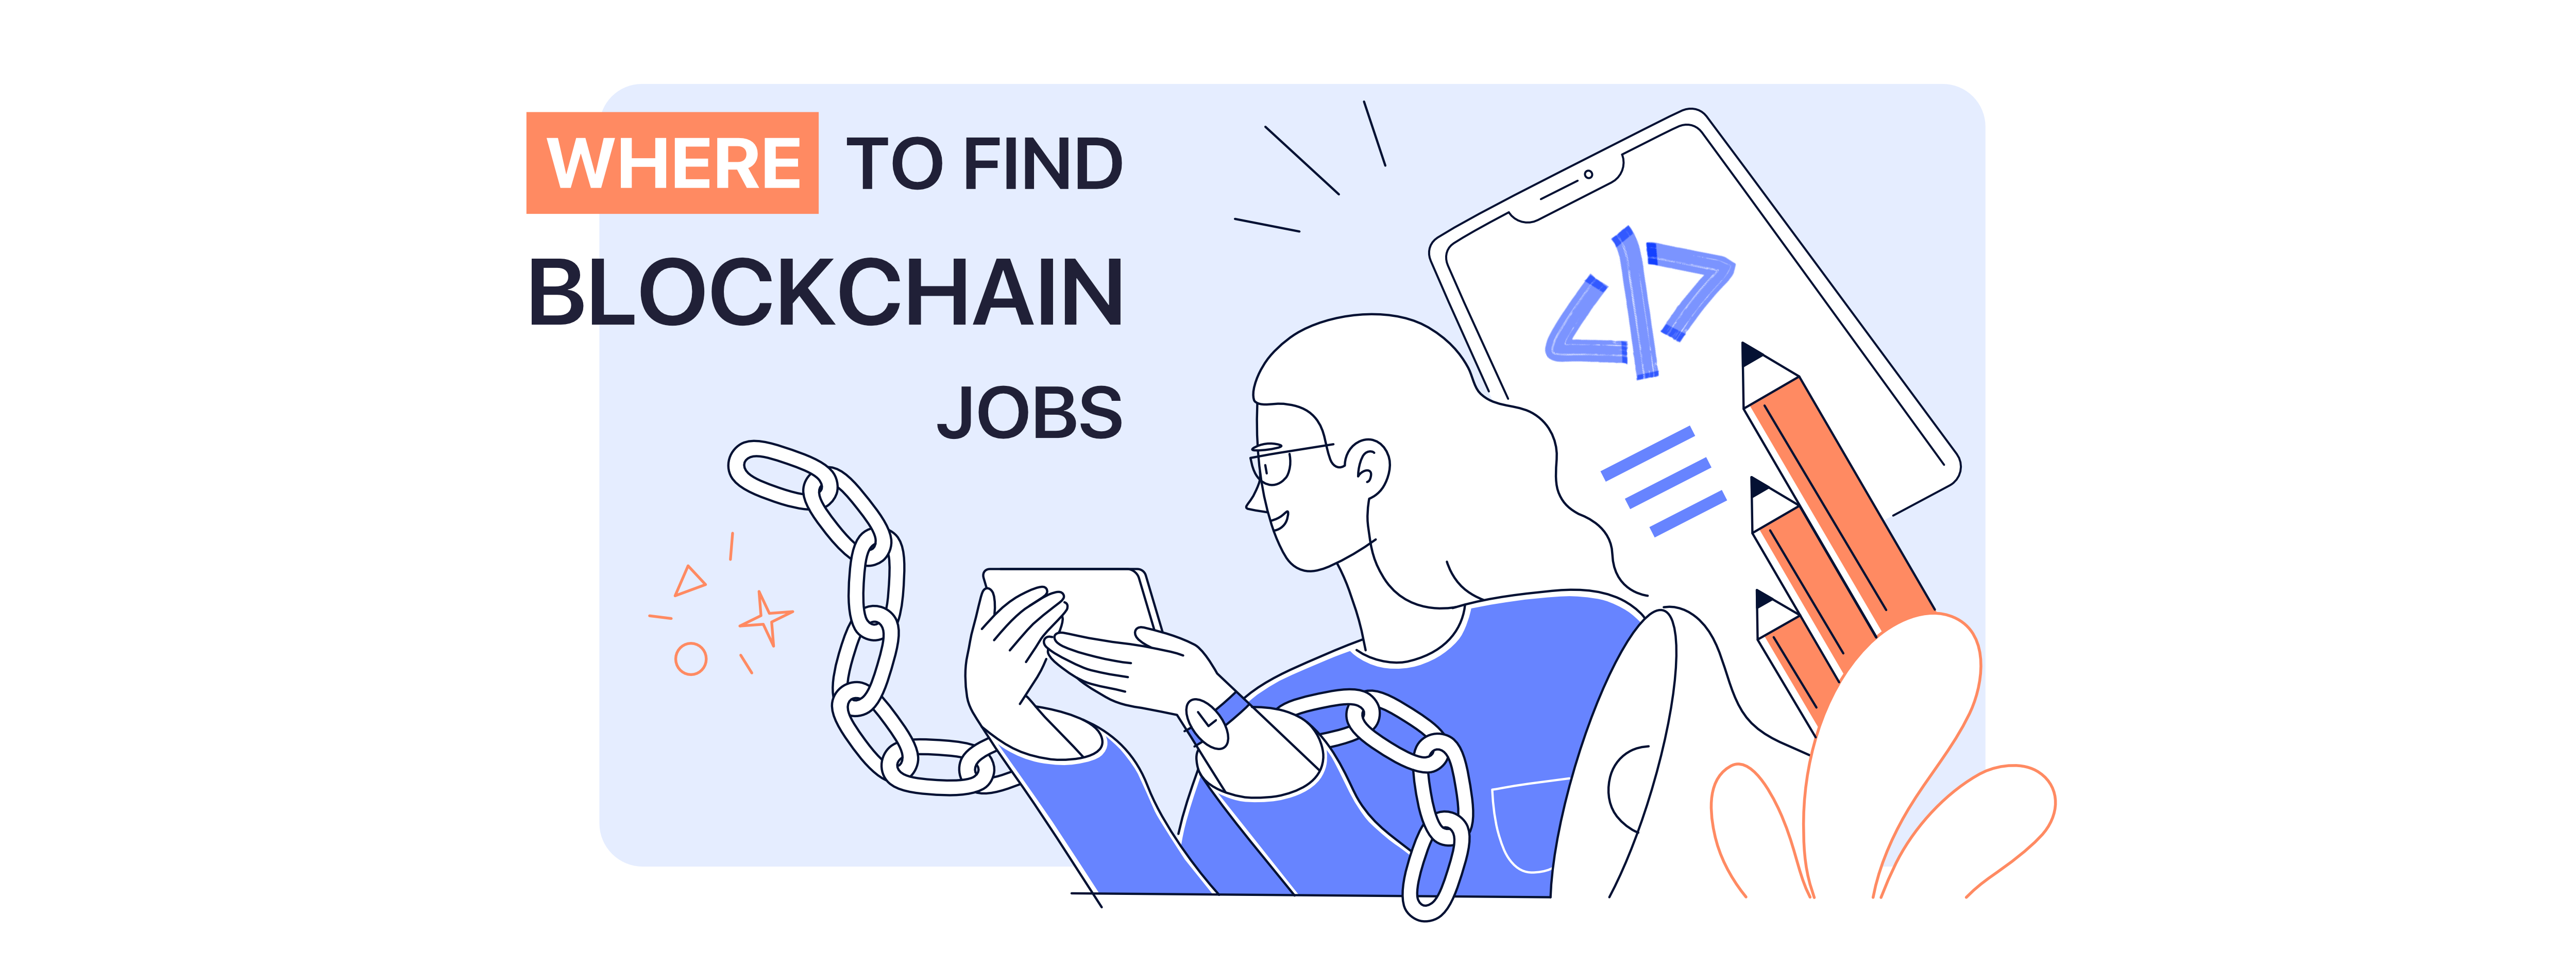 Where to find blockchain jobs